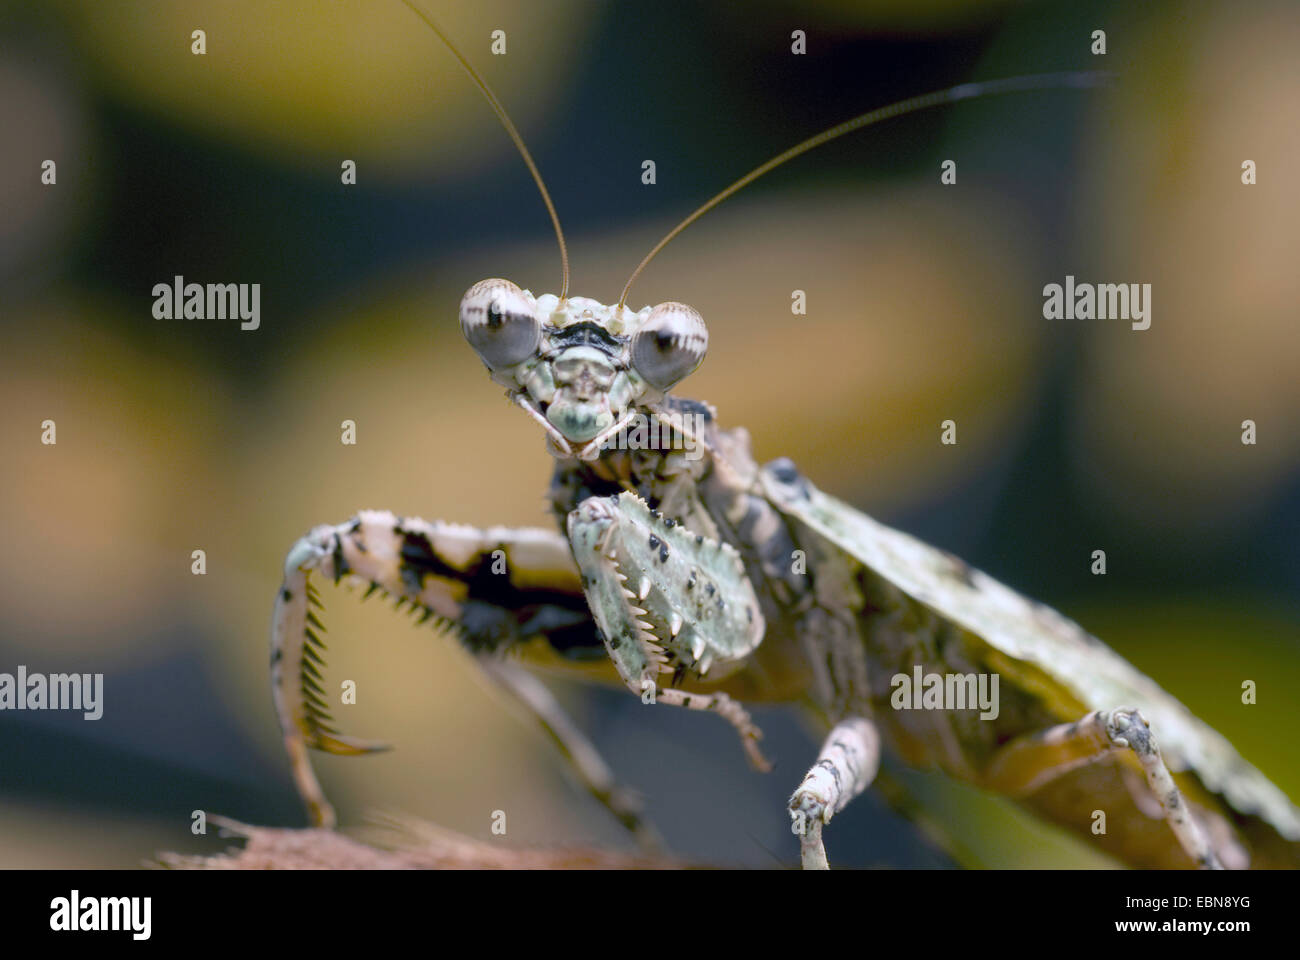 Theopompa servillei Mantis (corteza), media longitud vertical Foto de stock